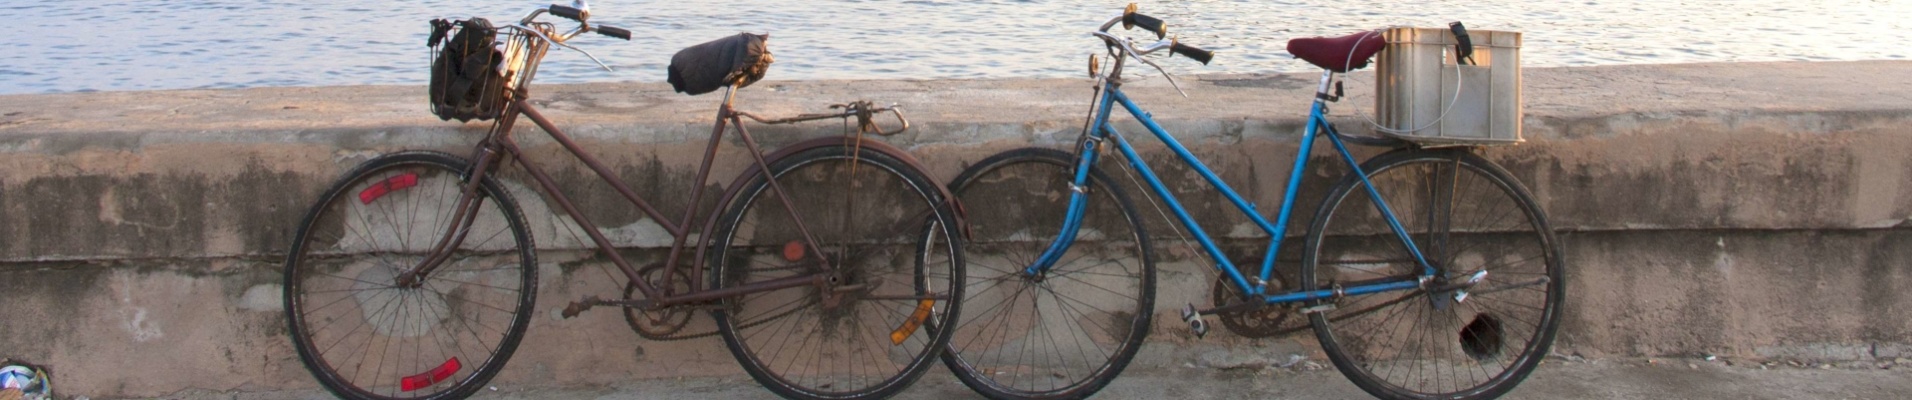 bicyclette-malecon-la-havane-cuba